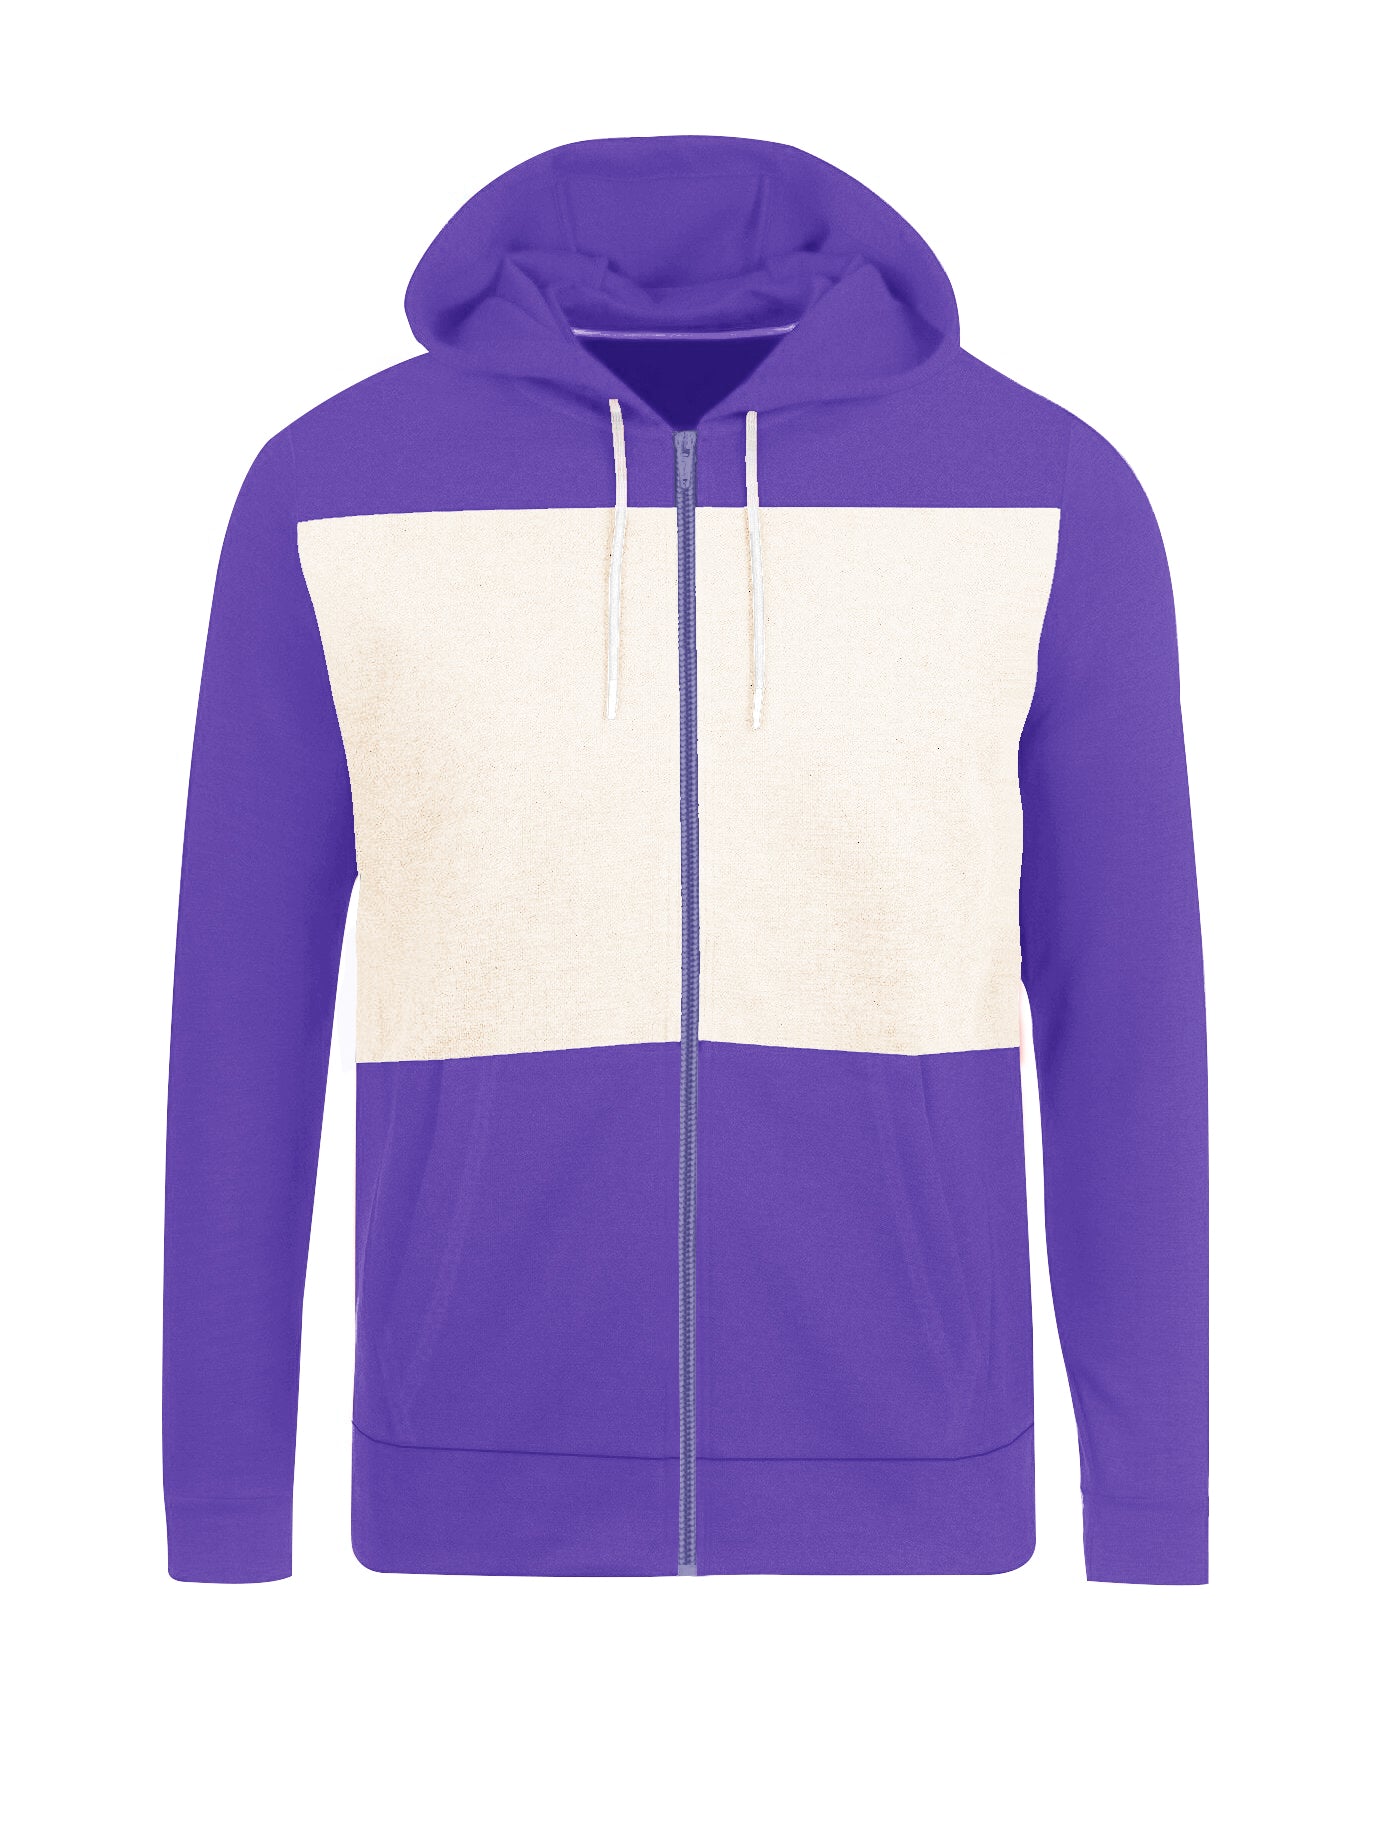 Nyc Polo Fleece Zipper Hoodie For Men-Purple with Panel-SP697